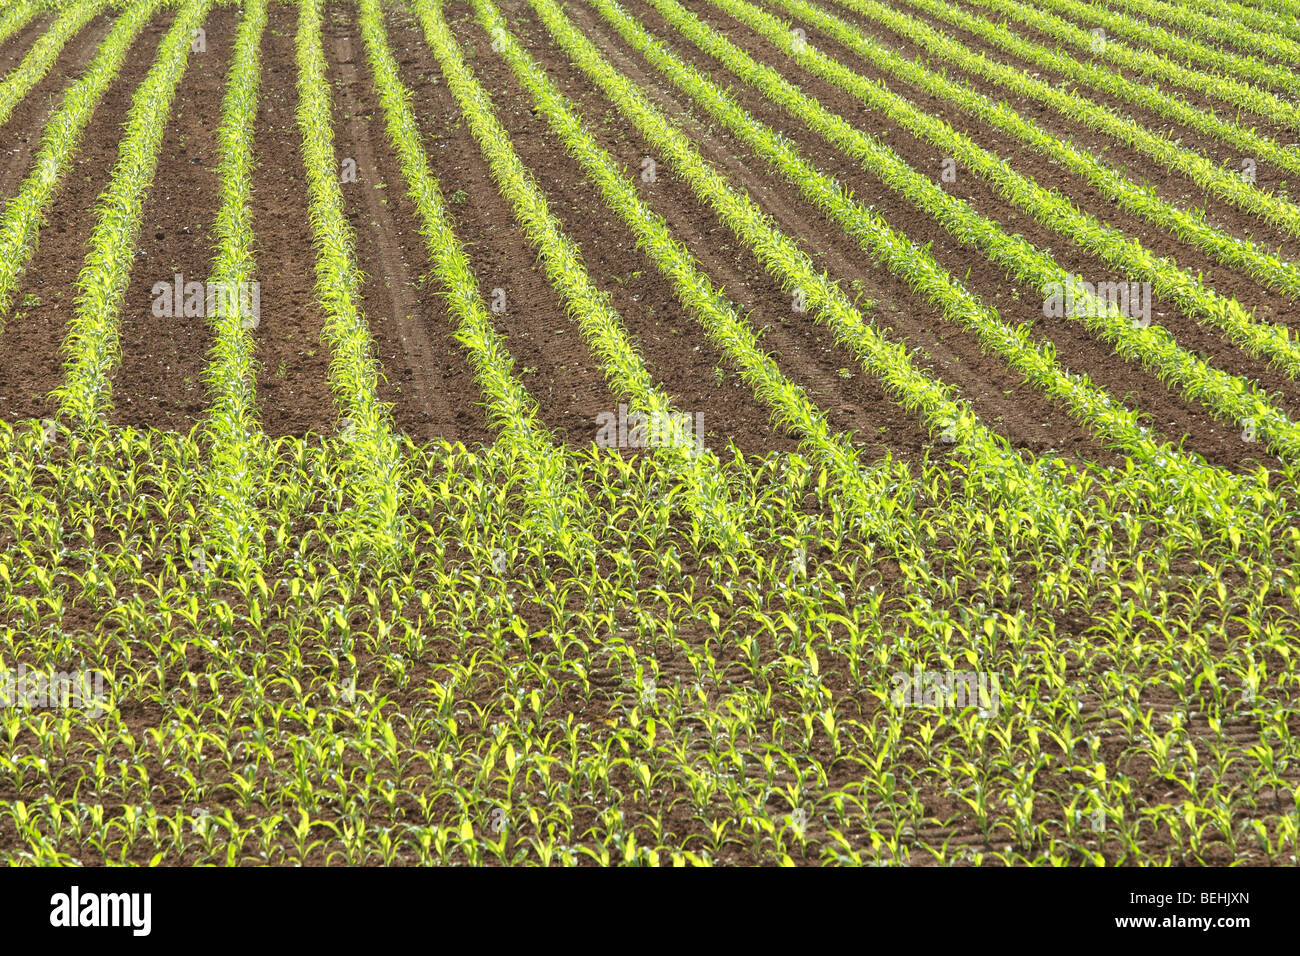 Maize / corn field (Zea mays), Belgium Stock Photo